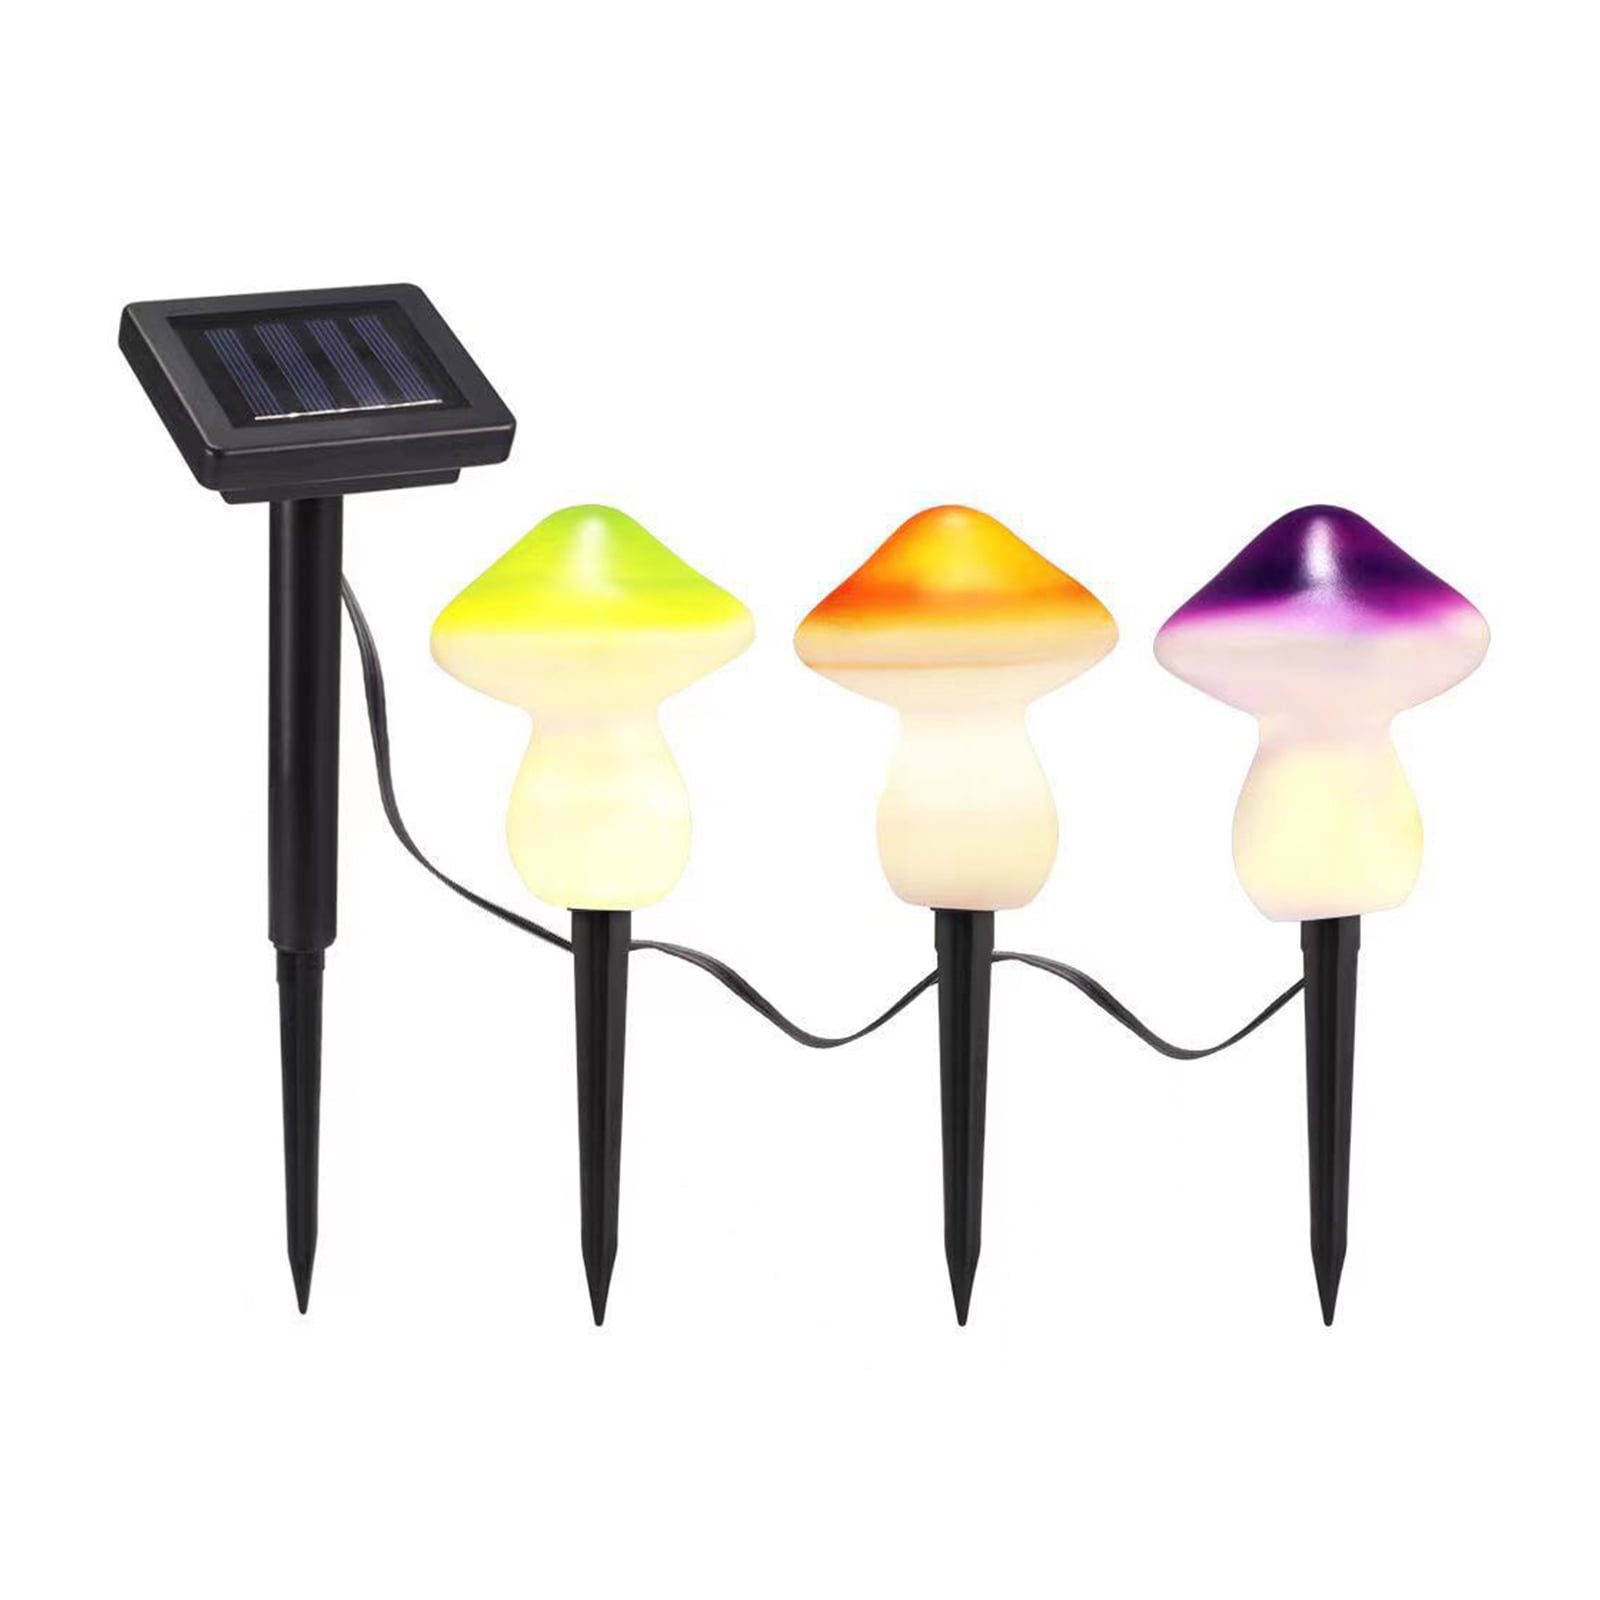 Details about   Solar Powered Mushroom LED Light Pathway Lamp Outdoor Garden Yard Decor Green 